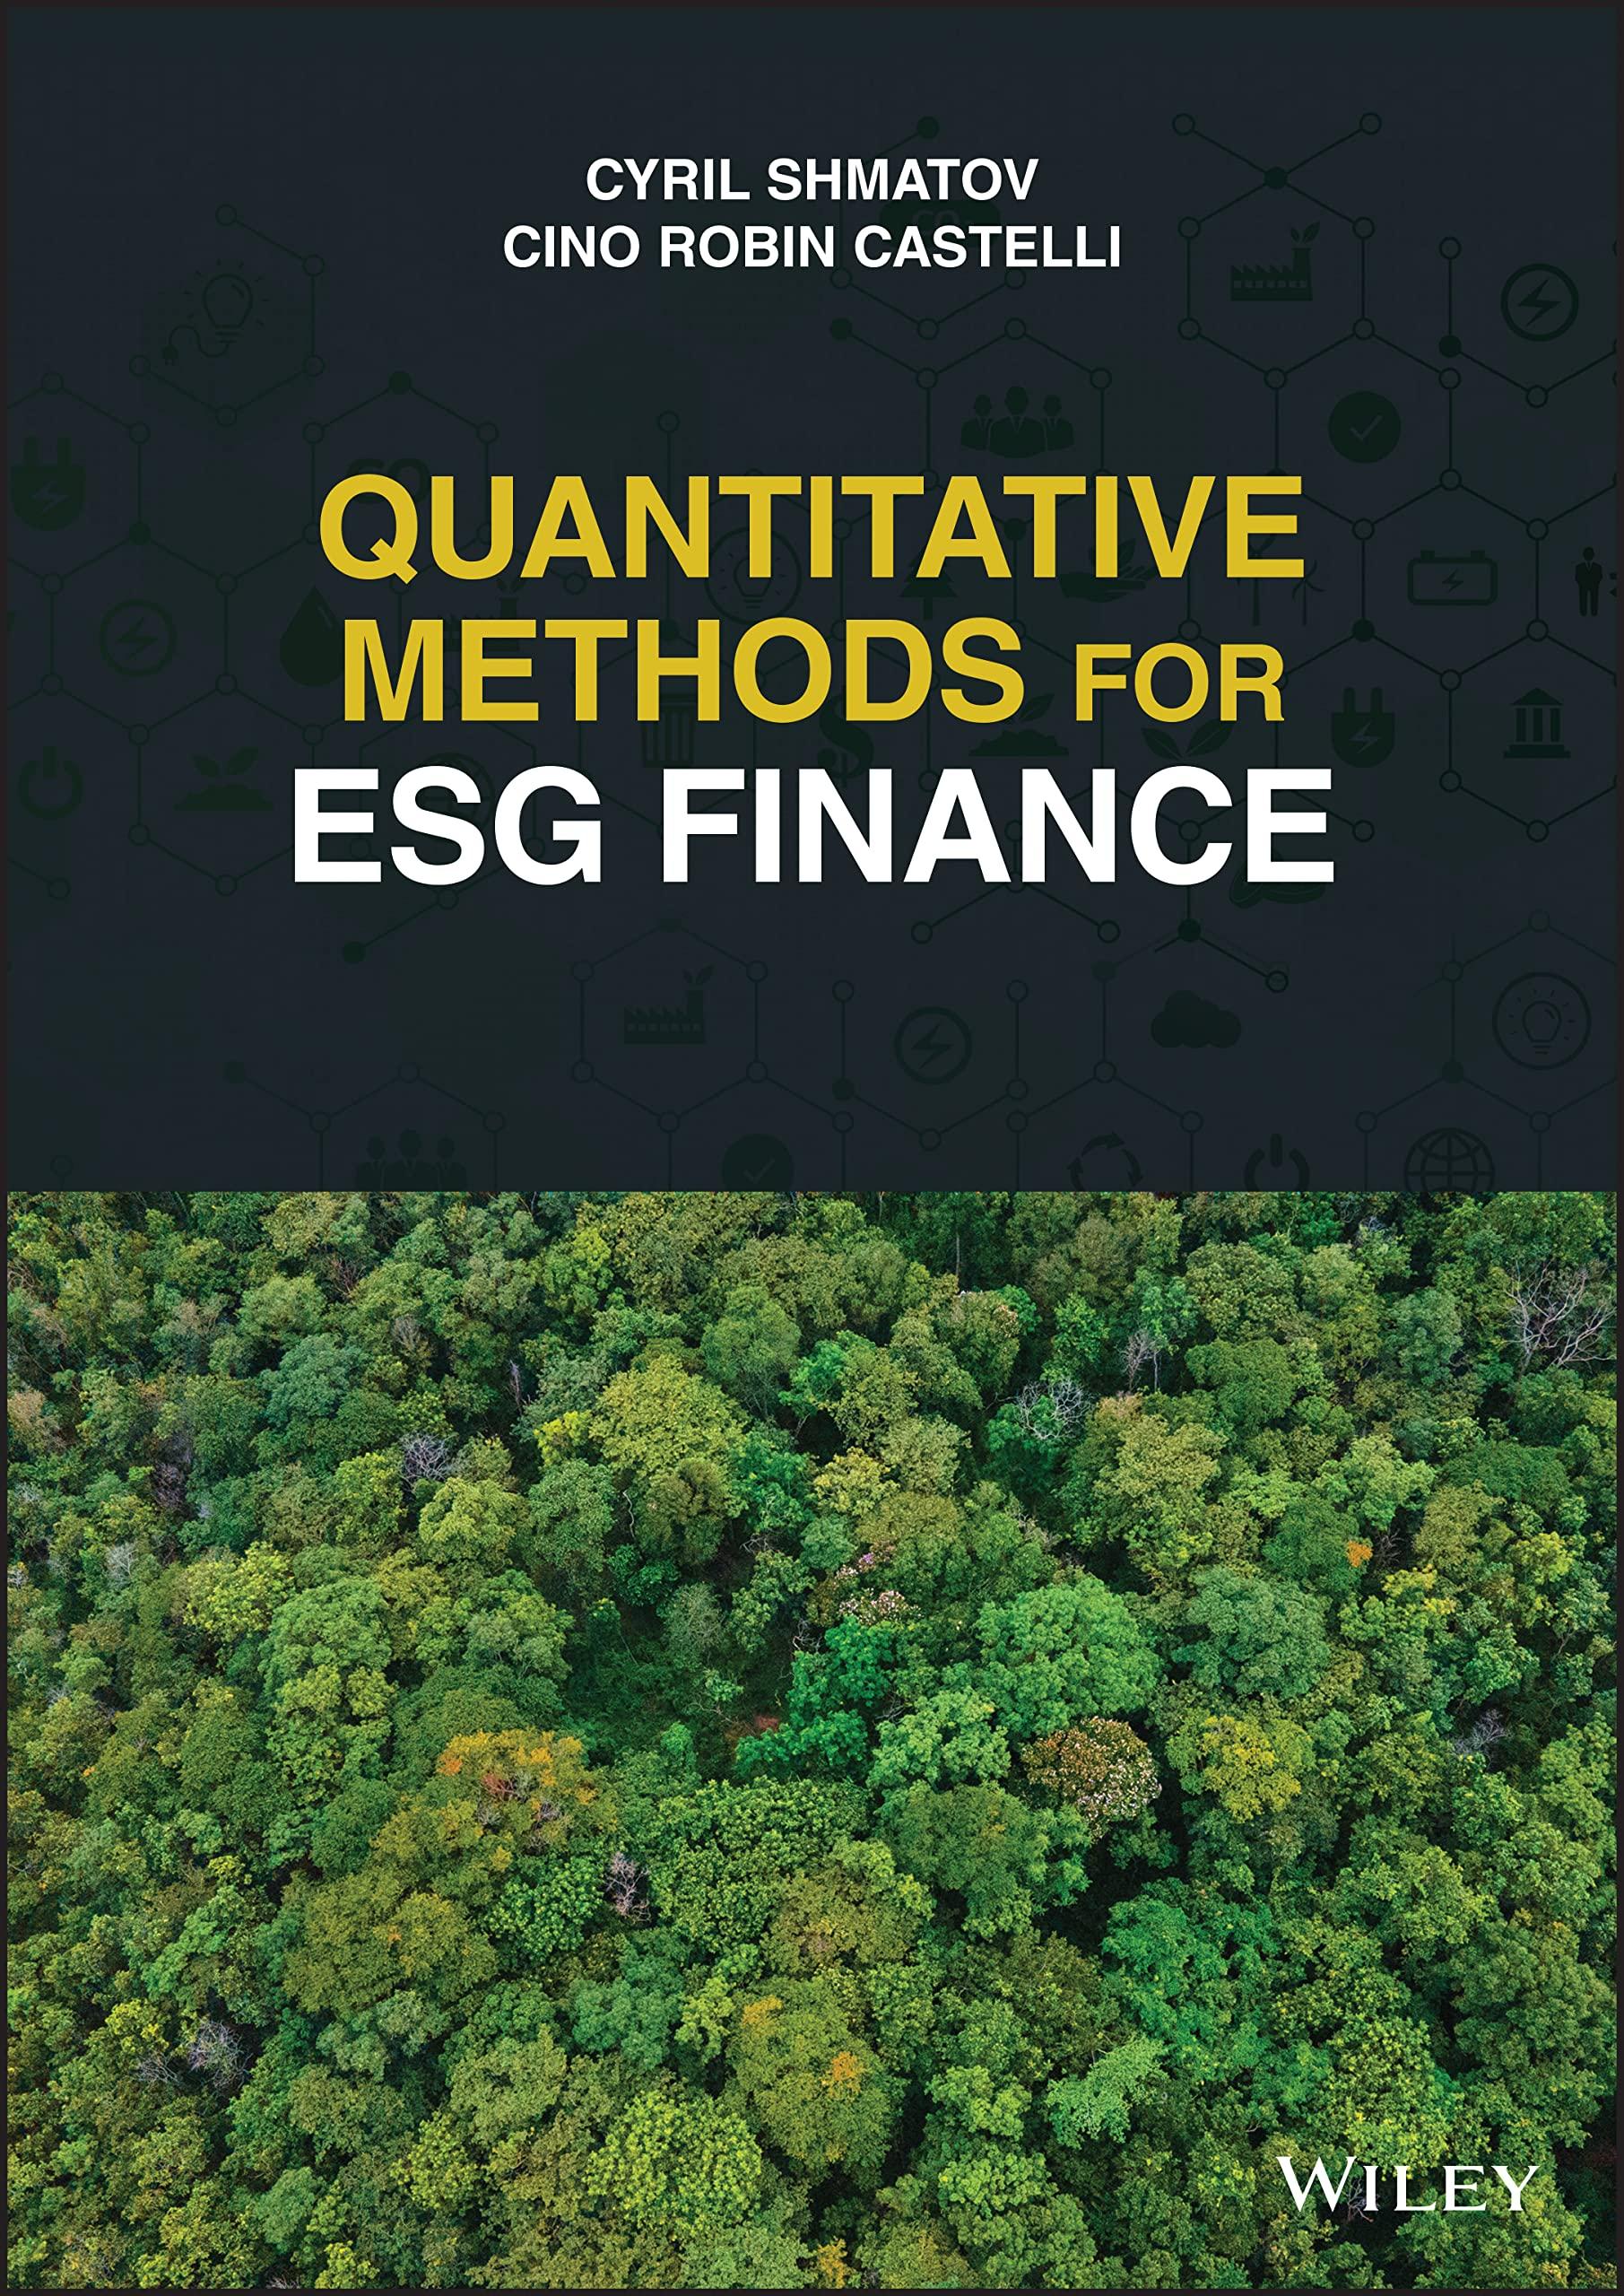 quantitative methods for esg finance 1st edition cino robin castelli, cyril shmatov 1119903807, 978-1119903802